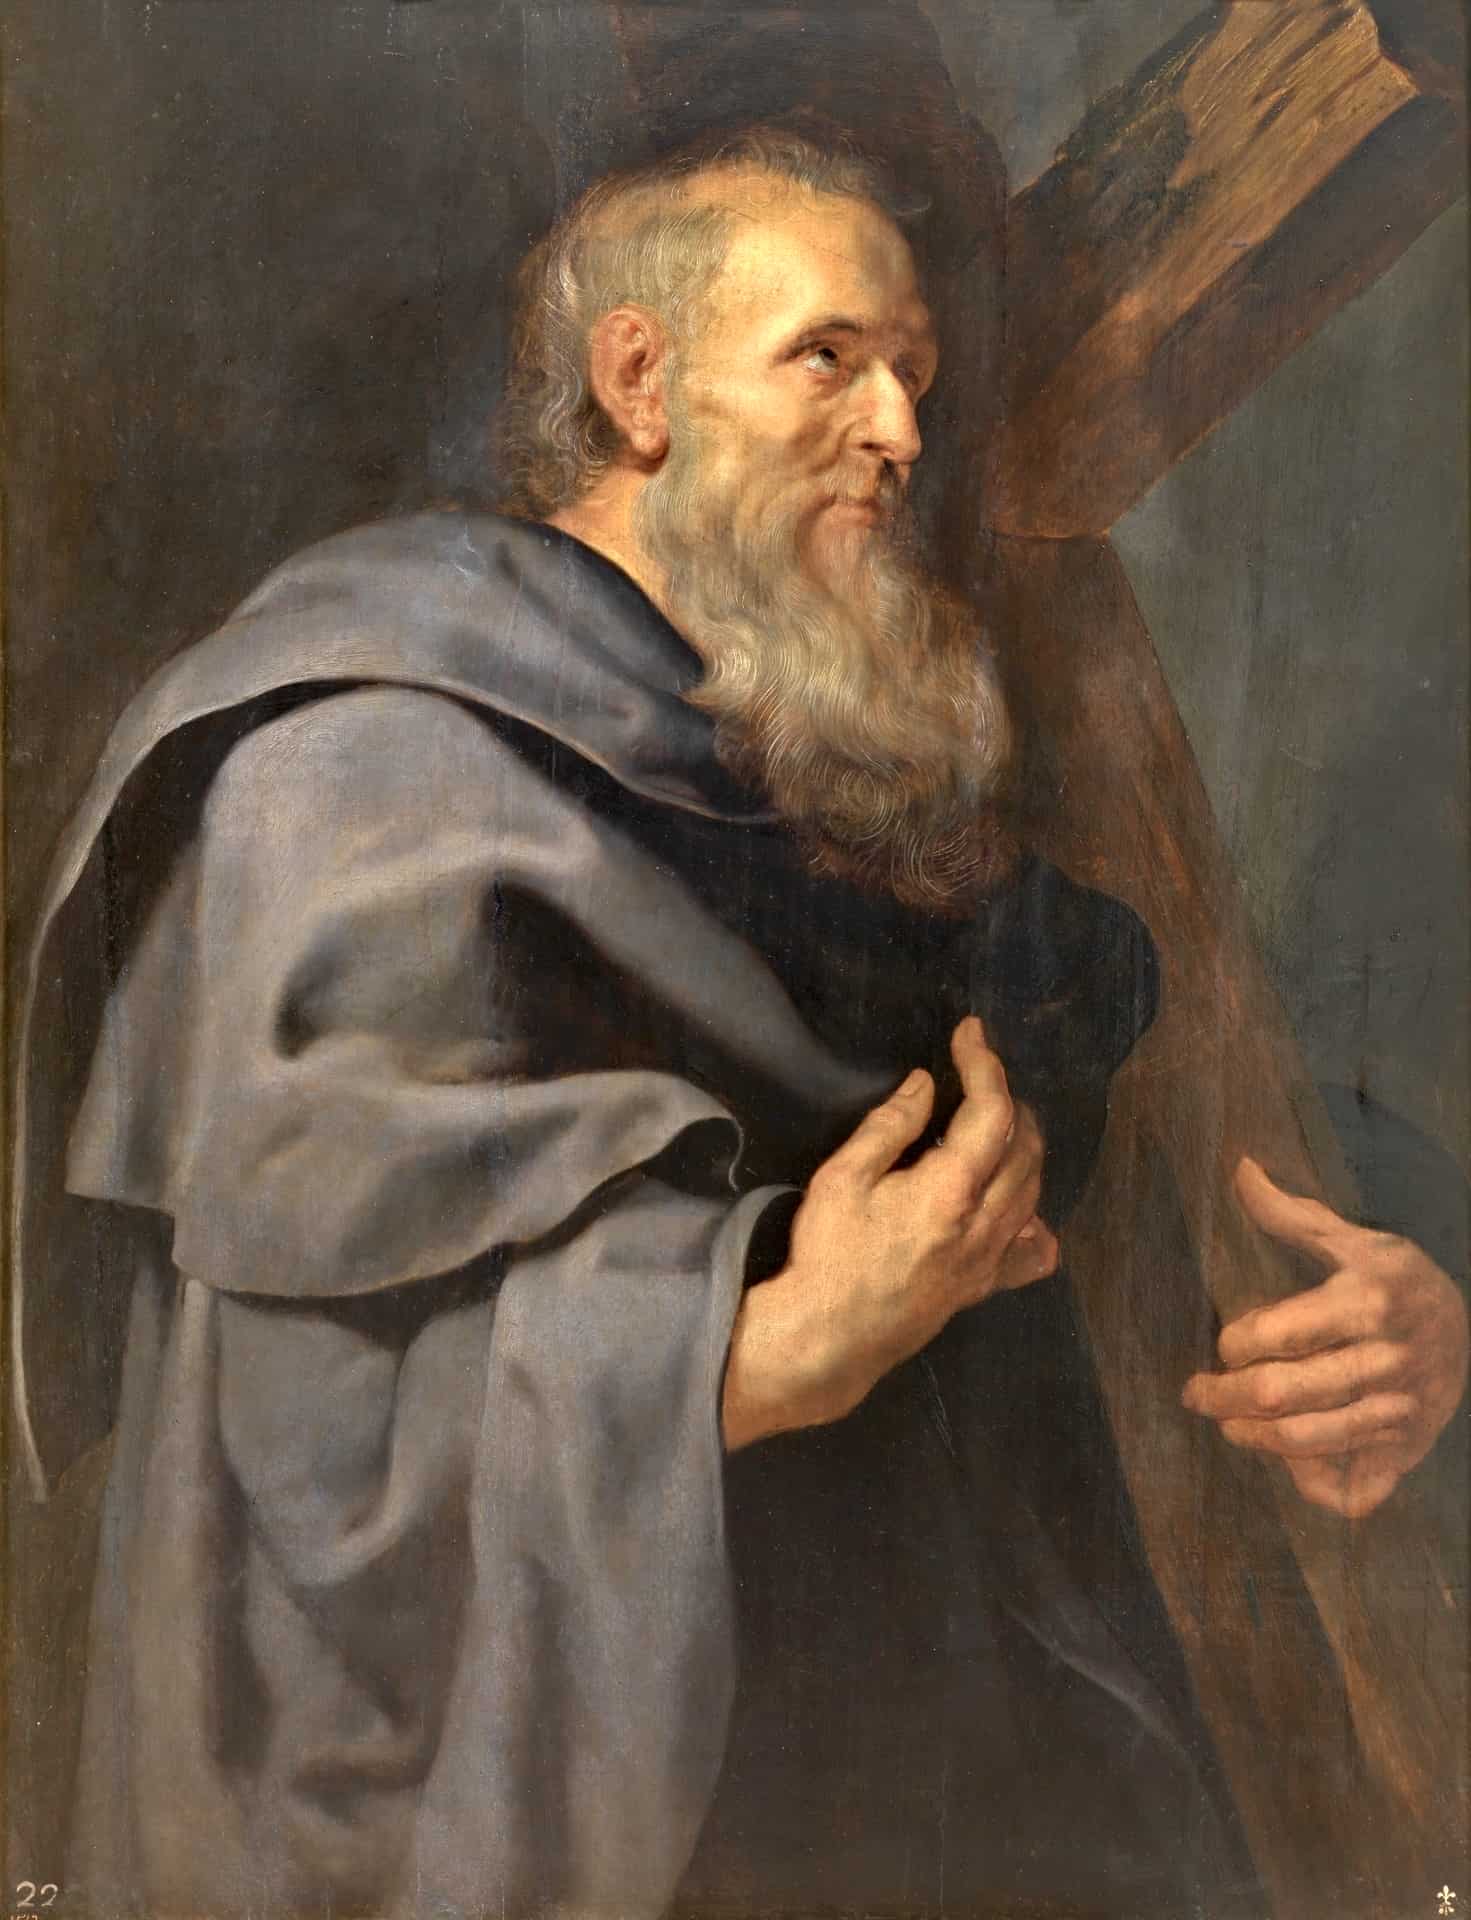 St Phillip the Apostle